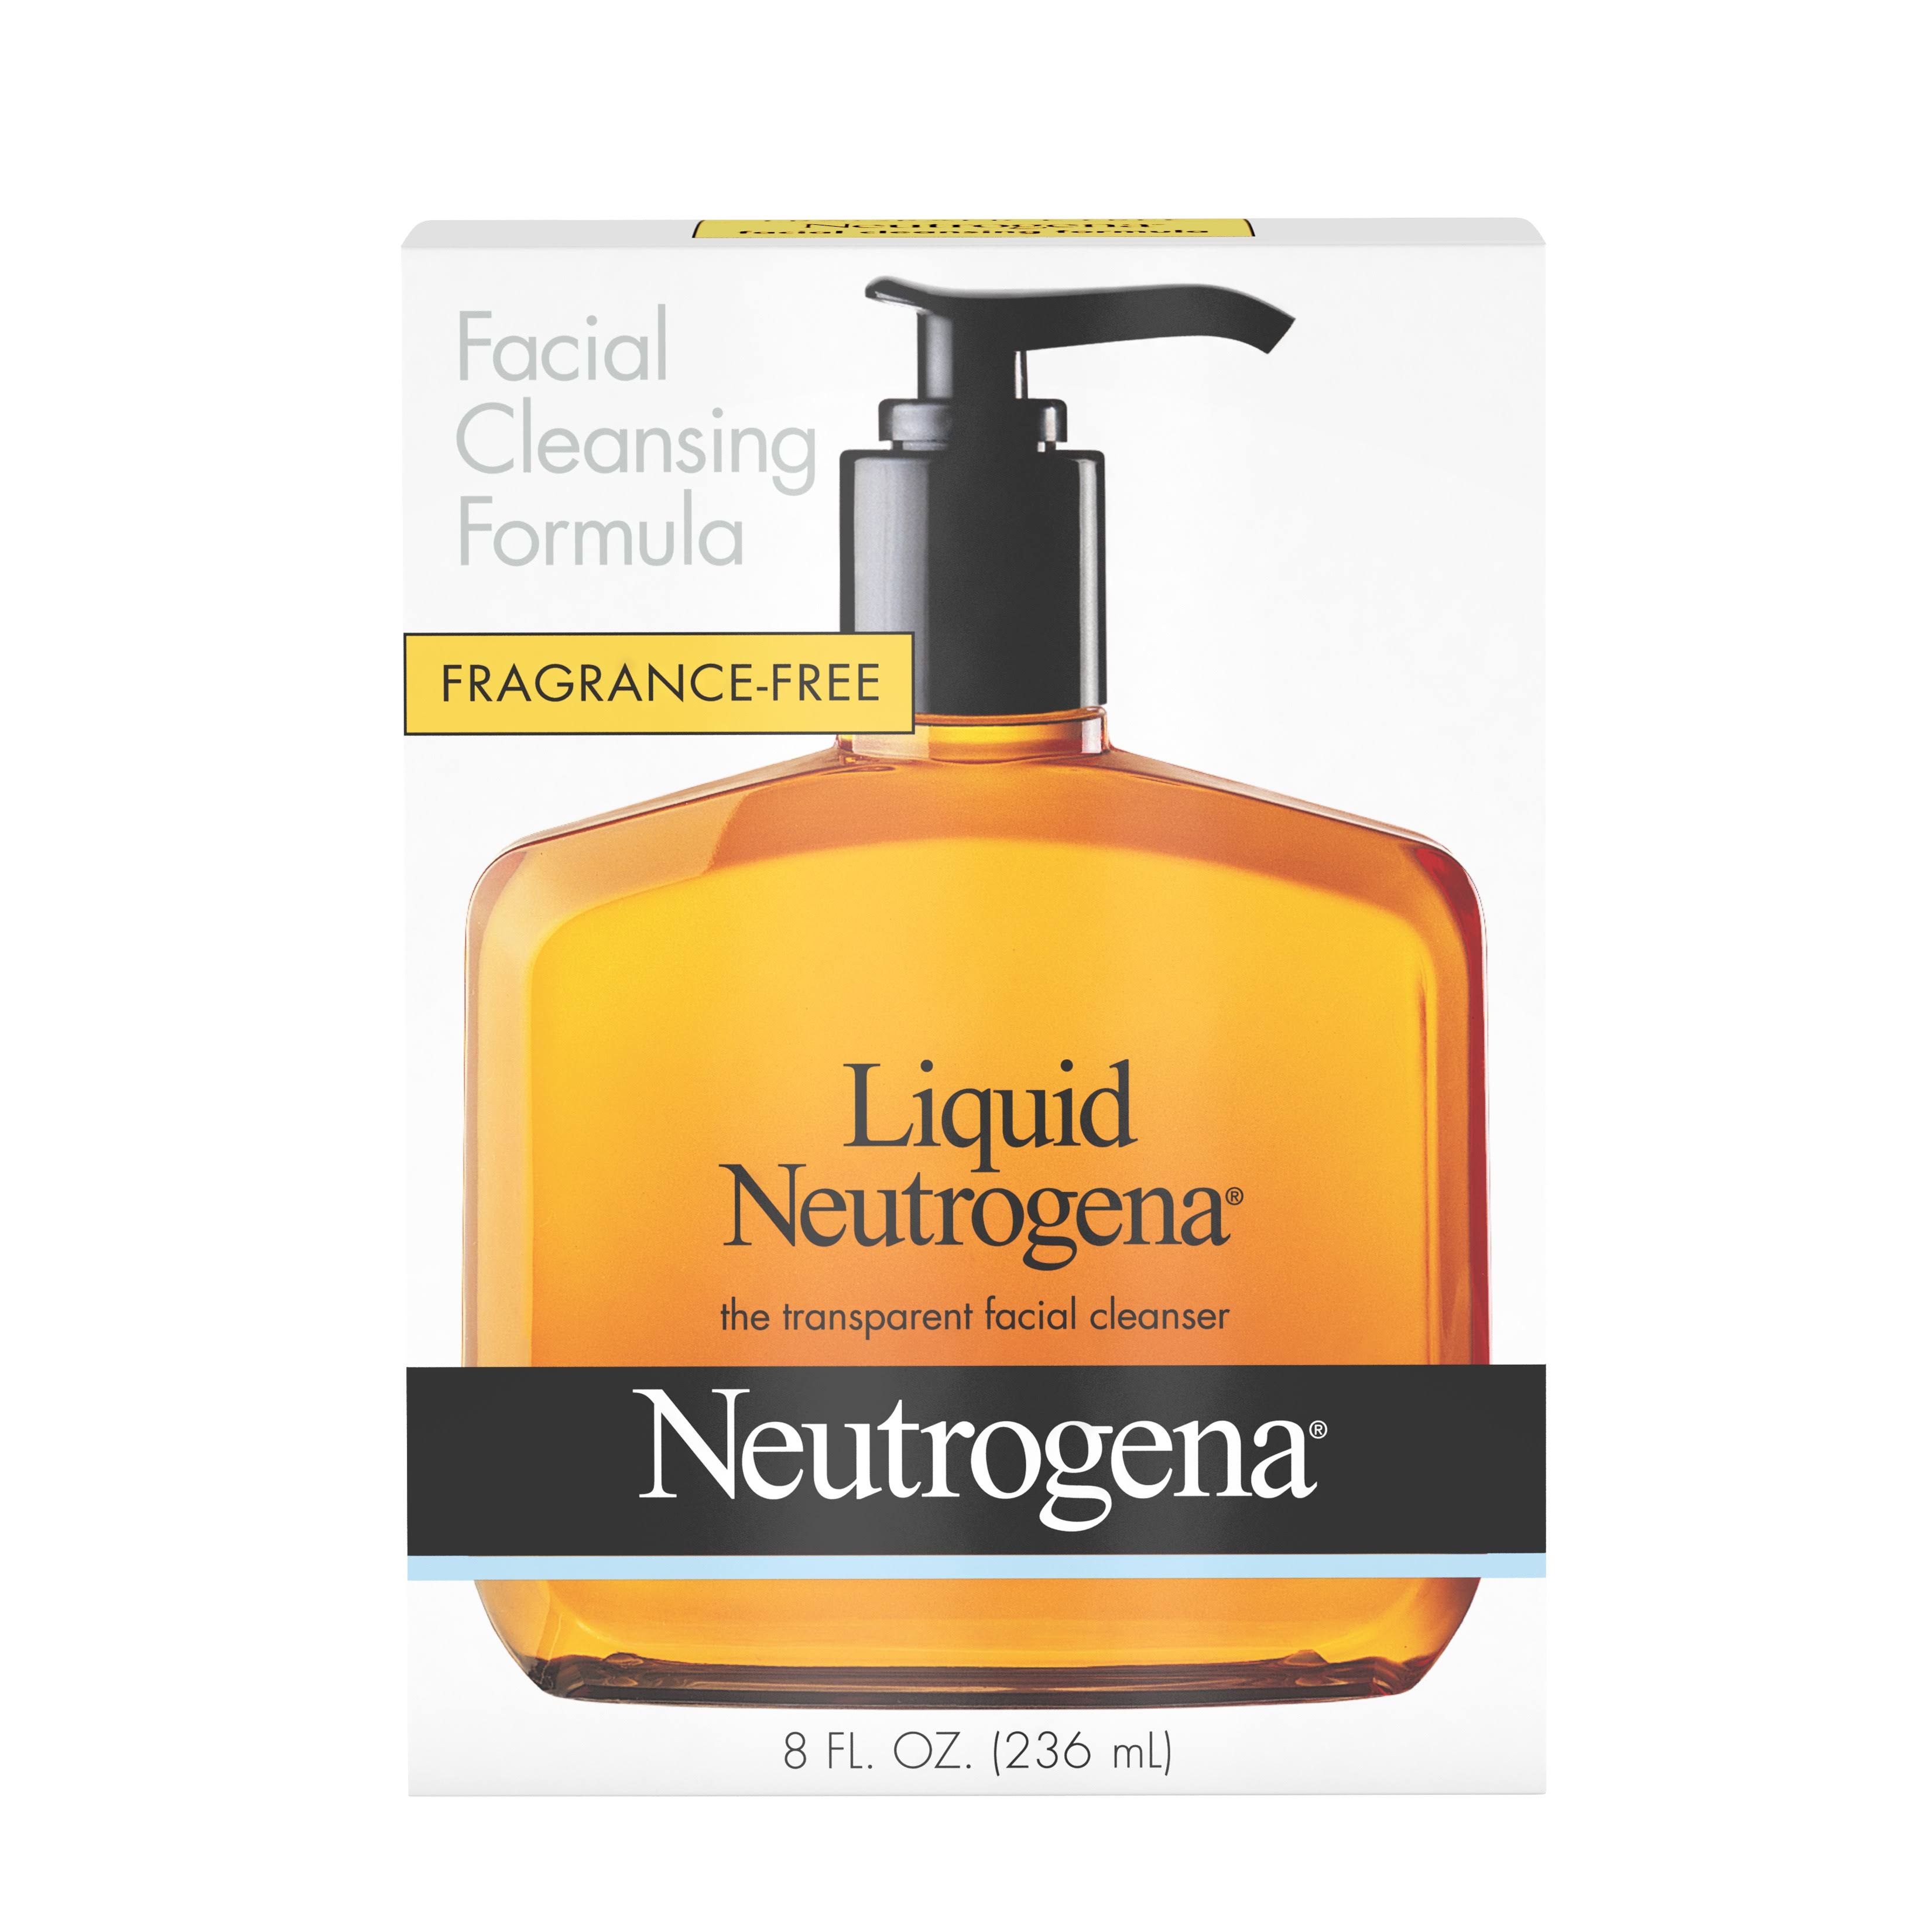 Neutrogena Liquid Neutrogena Facial Cleansing Formula - 8 fl oz